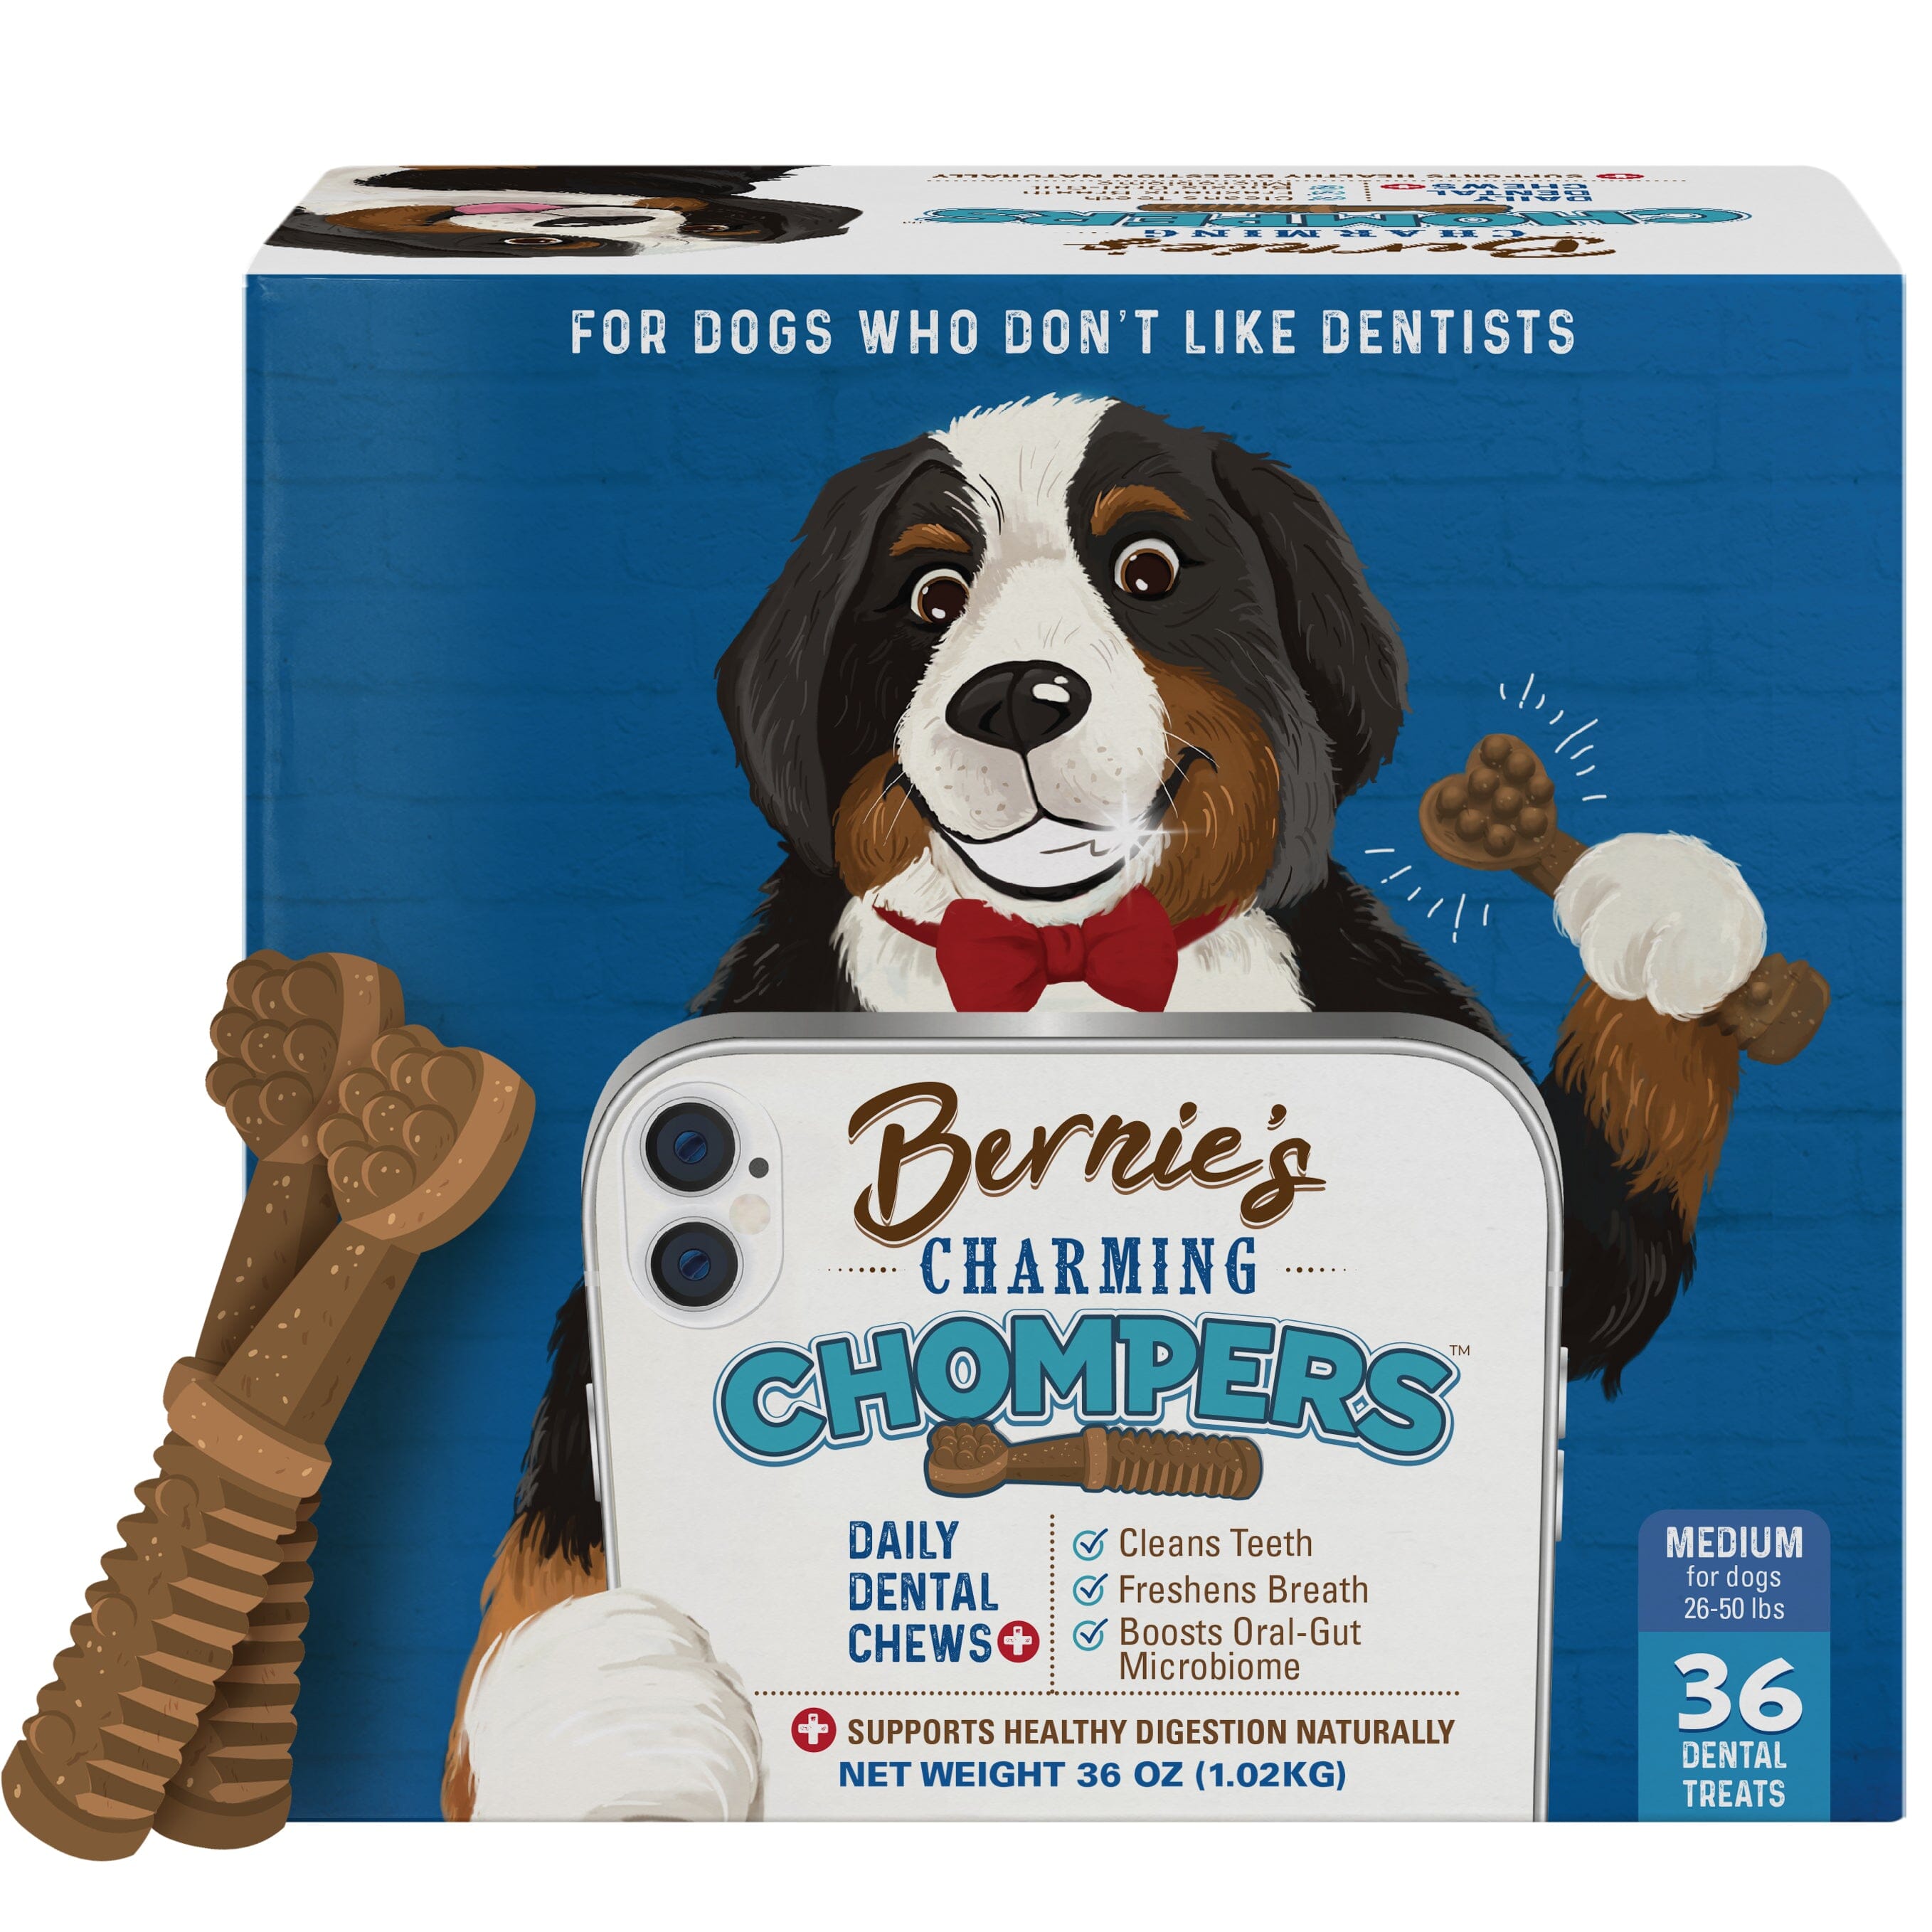 Bernie's Charming Chompers Digestive Supplement Bernie's Best Medium Dogs (26-50 lb) 36 oz Box- 36 Count 